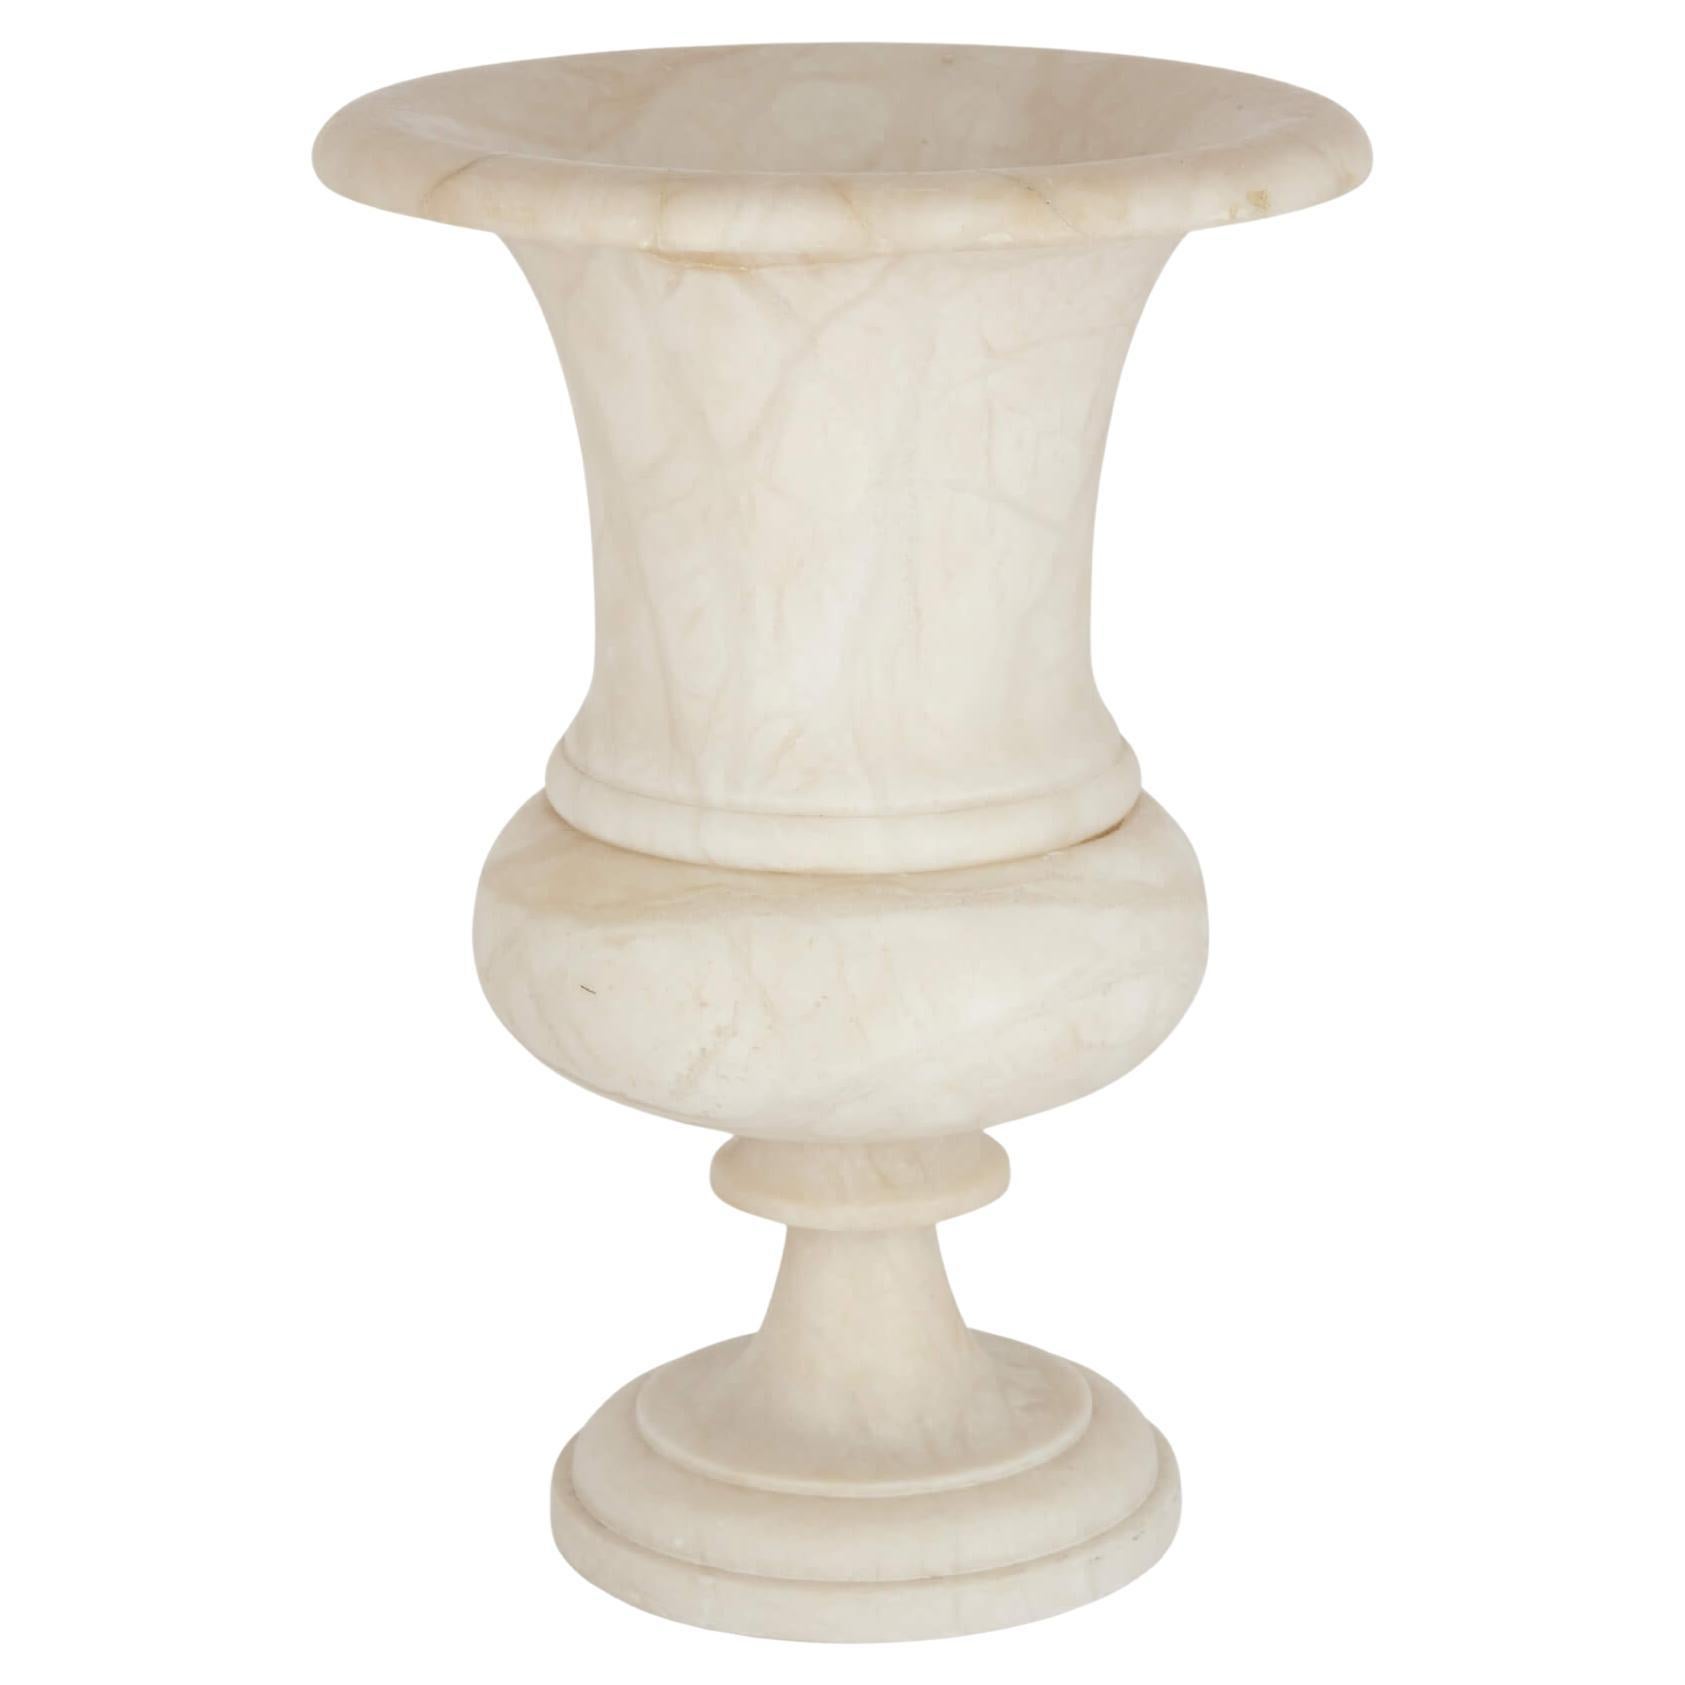 Large Neoclassical Alabaster Campagna-Shaped Vase